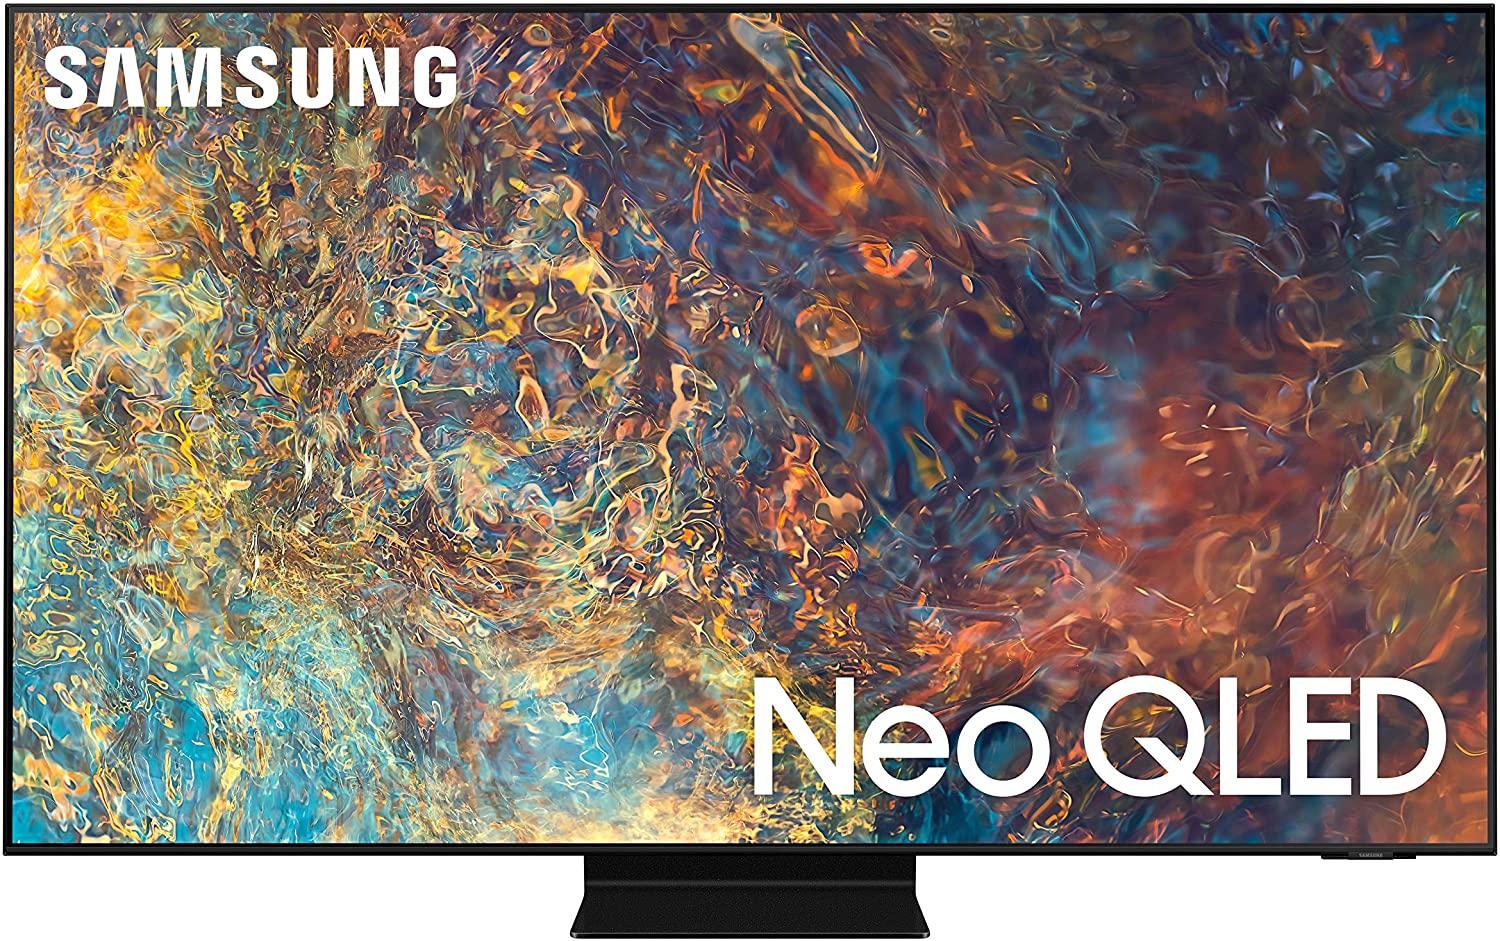 Samsung 55" QN90A (2021) Neo QLED 4K UHD Smart TV @ Best Buy $1099.99